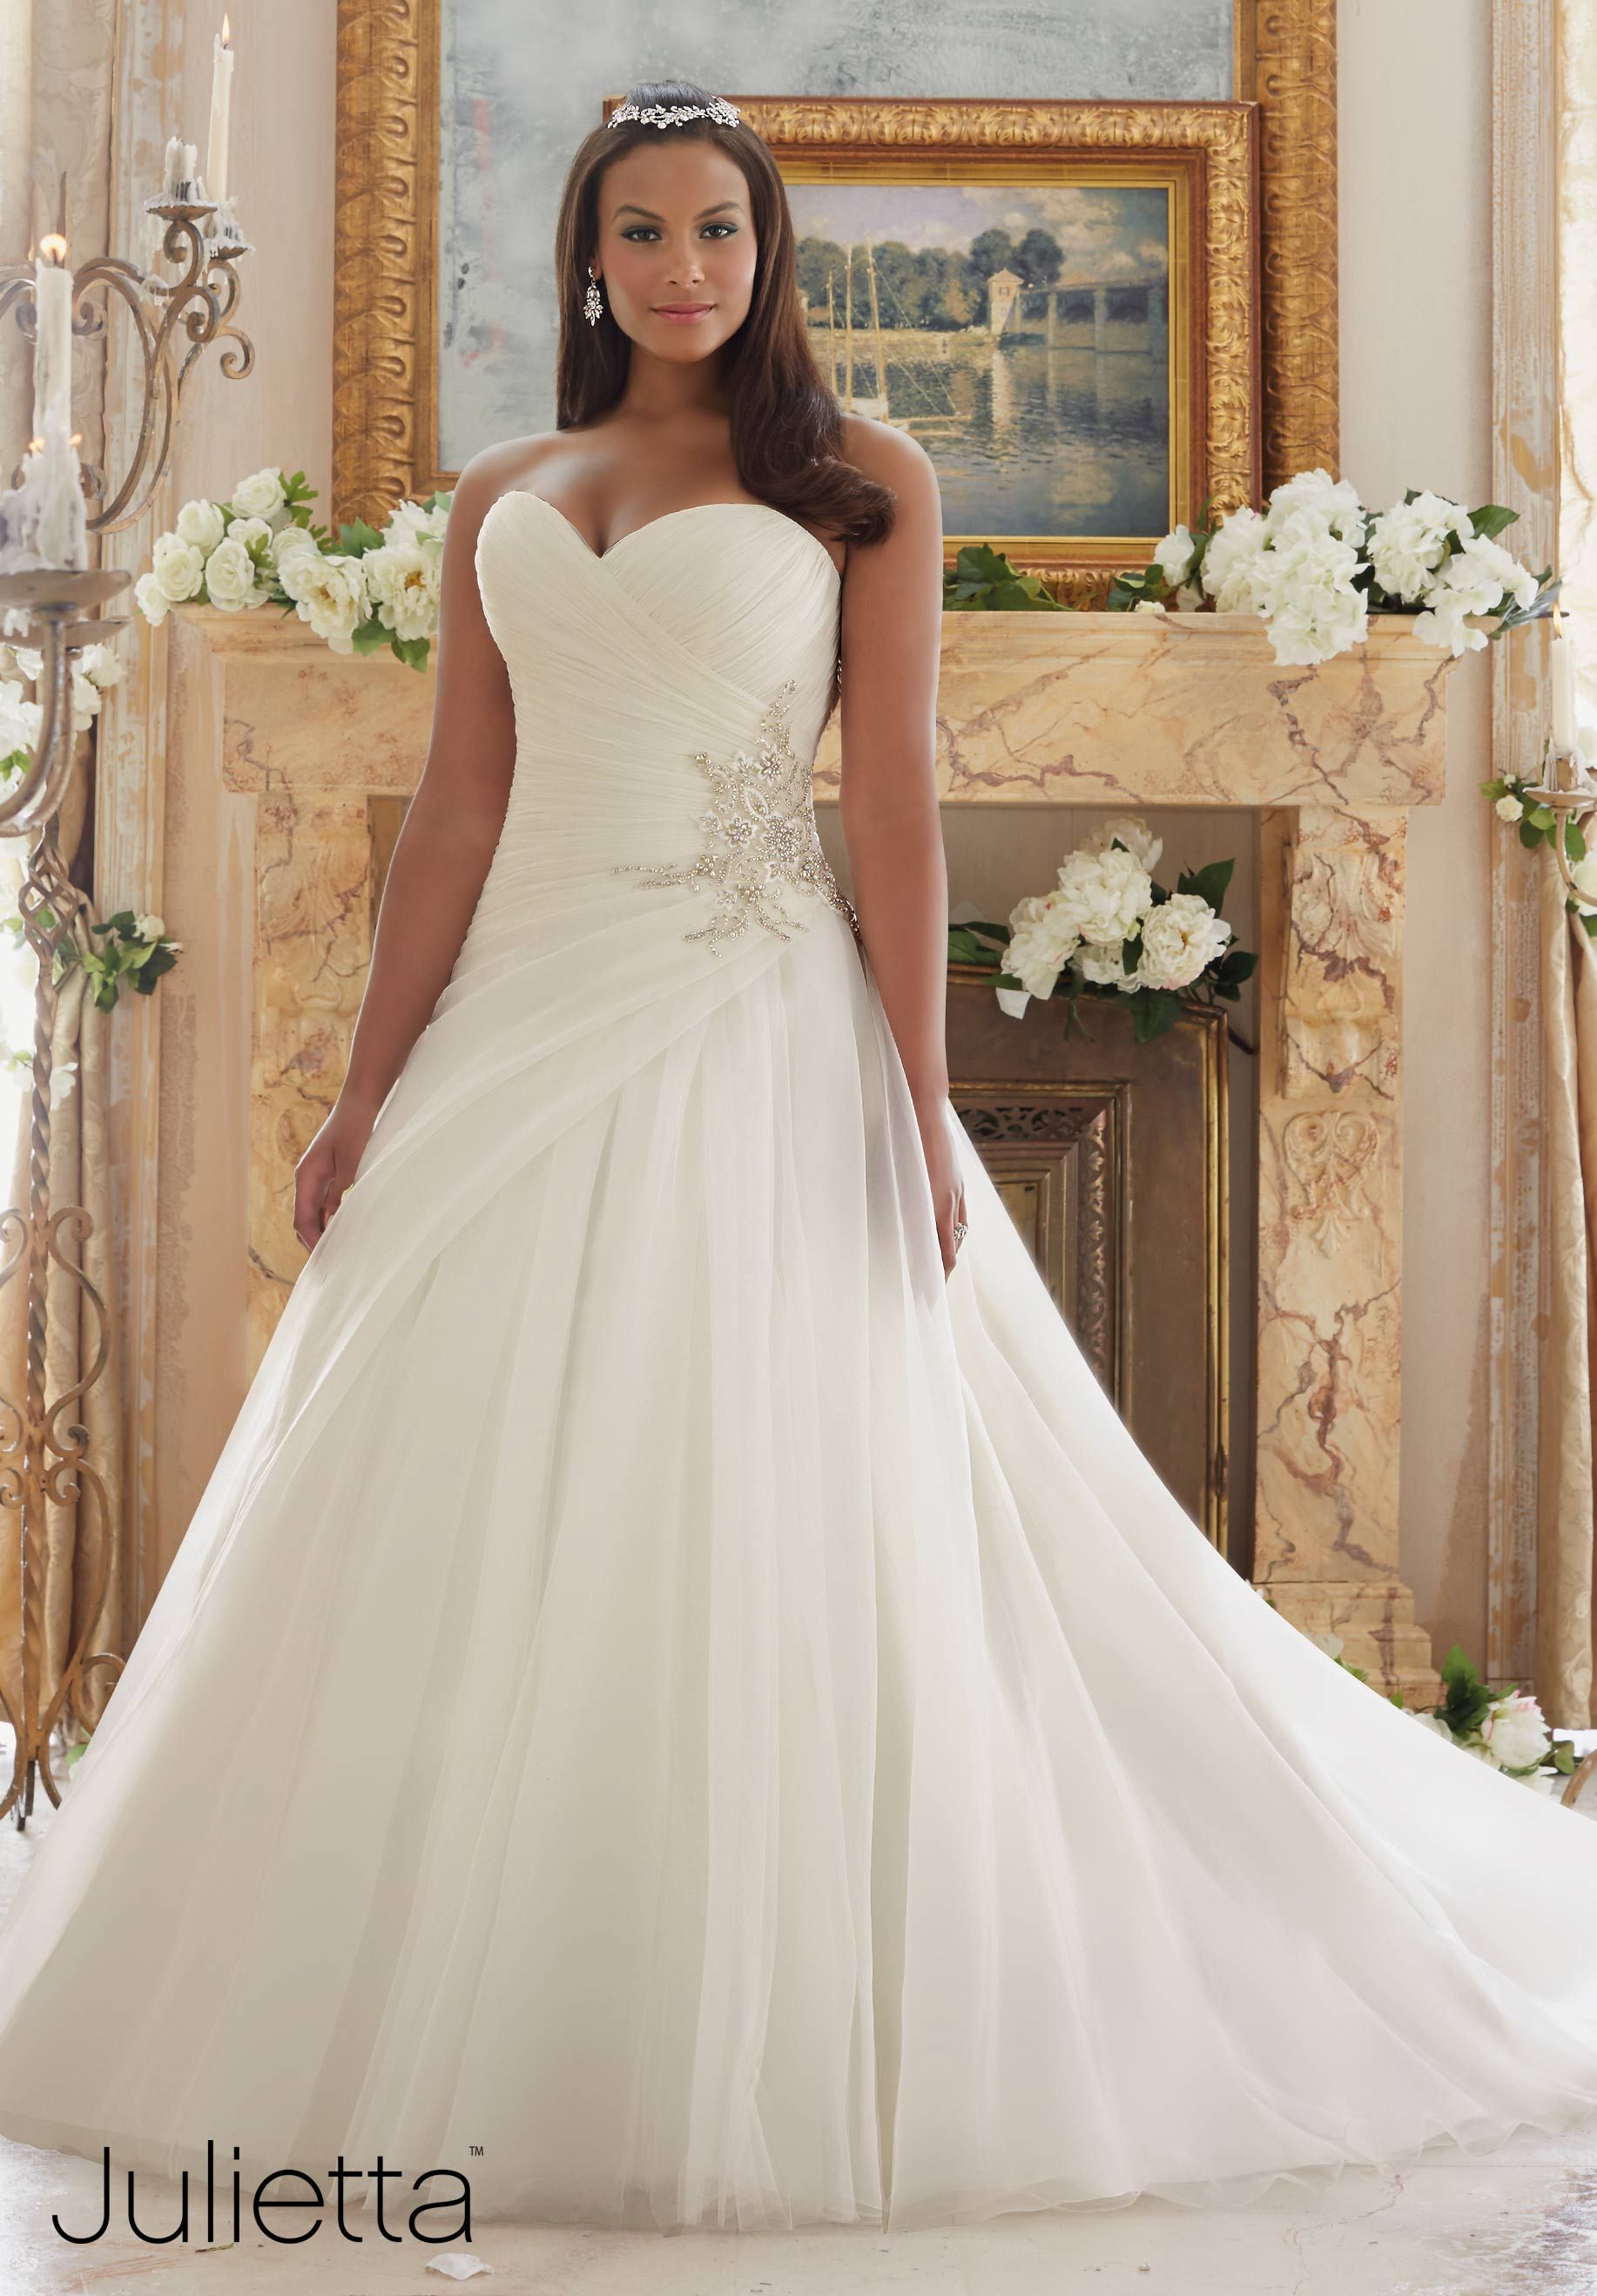 Plus Size Wedding Gowns | Mori Lee | Julietta Collection - The Pretty Pear Bride - Plus Size Bridal Magazine